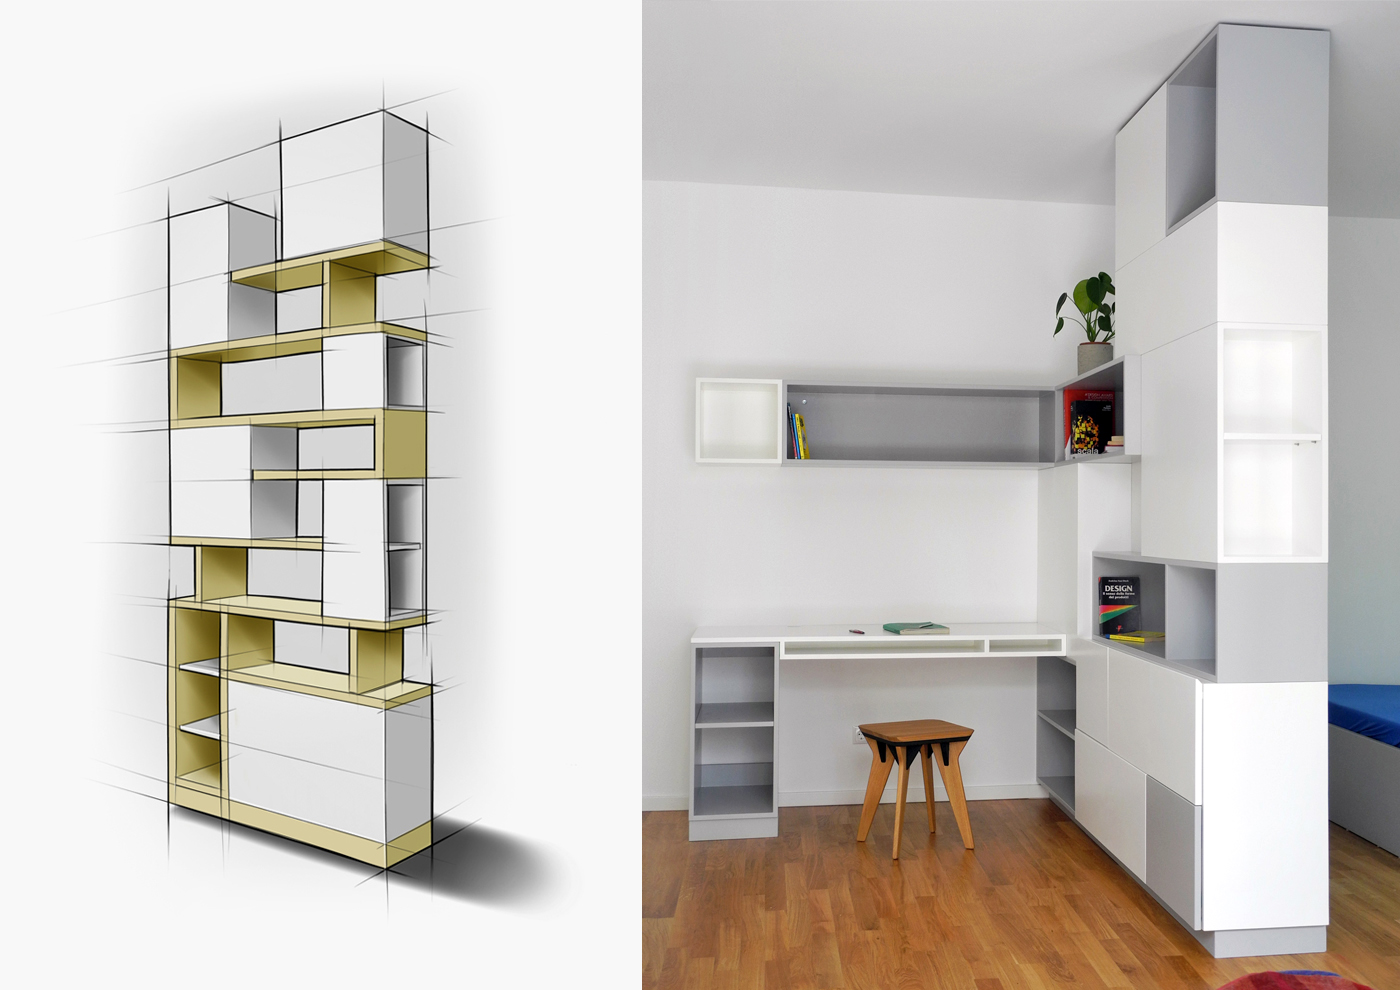 Tetris - Room divider - view4 - sketch - Davide Mezzasalma - Furniture design - Berlin